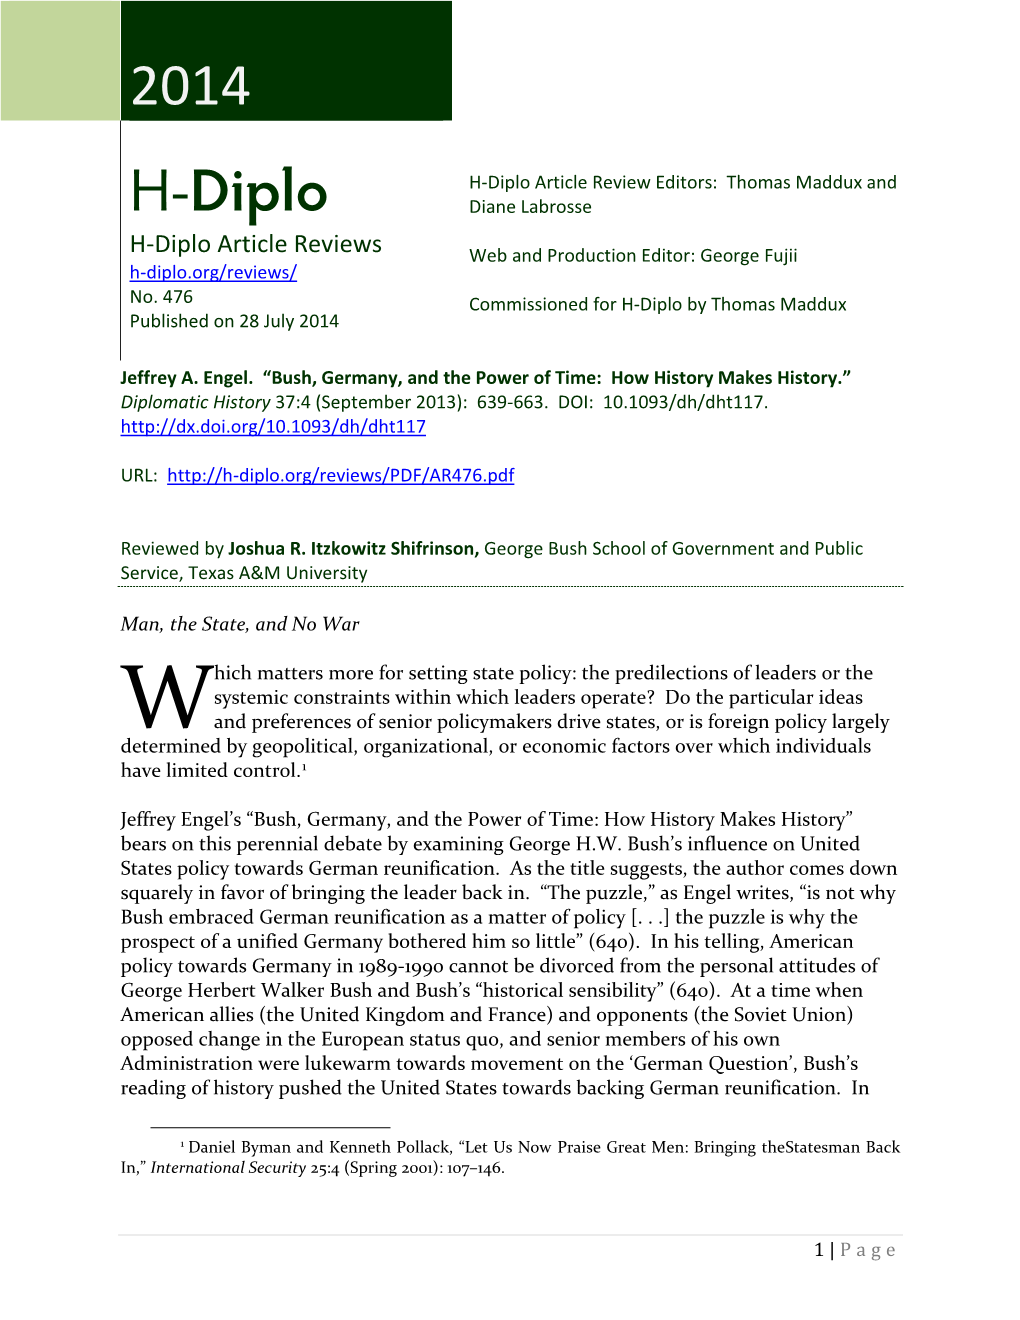 H-Diplo Article Review No